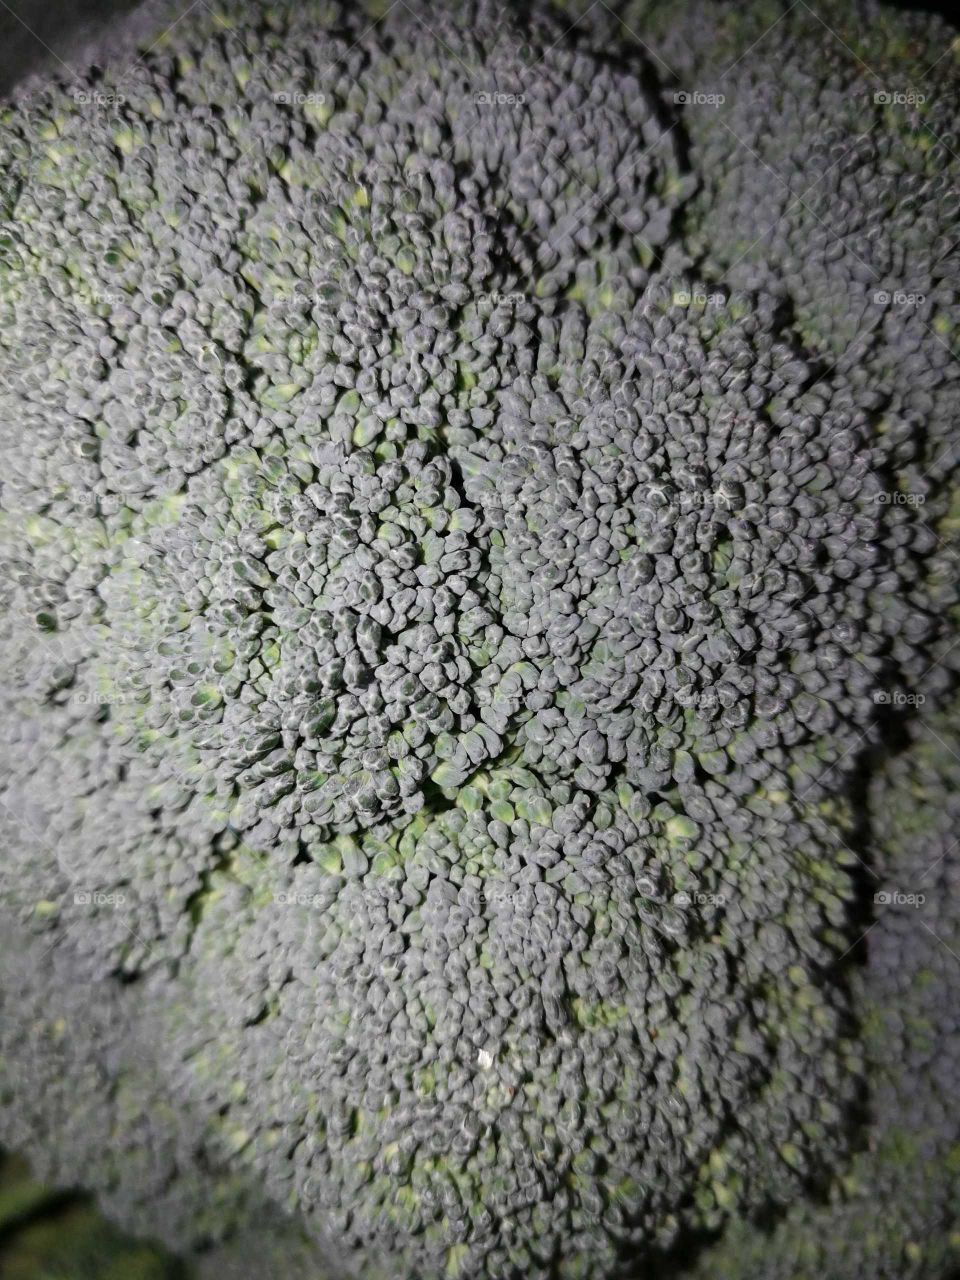 Texture (broccoli)